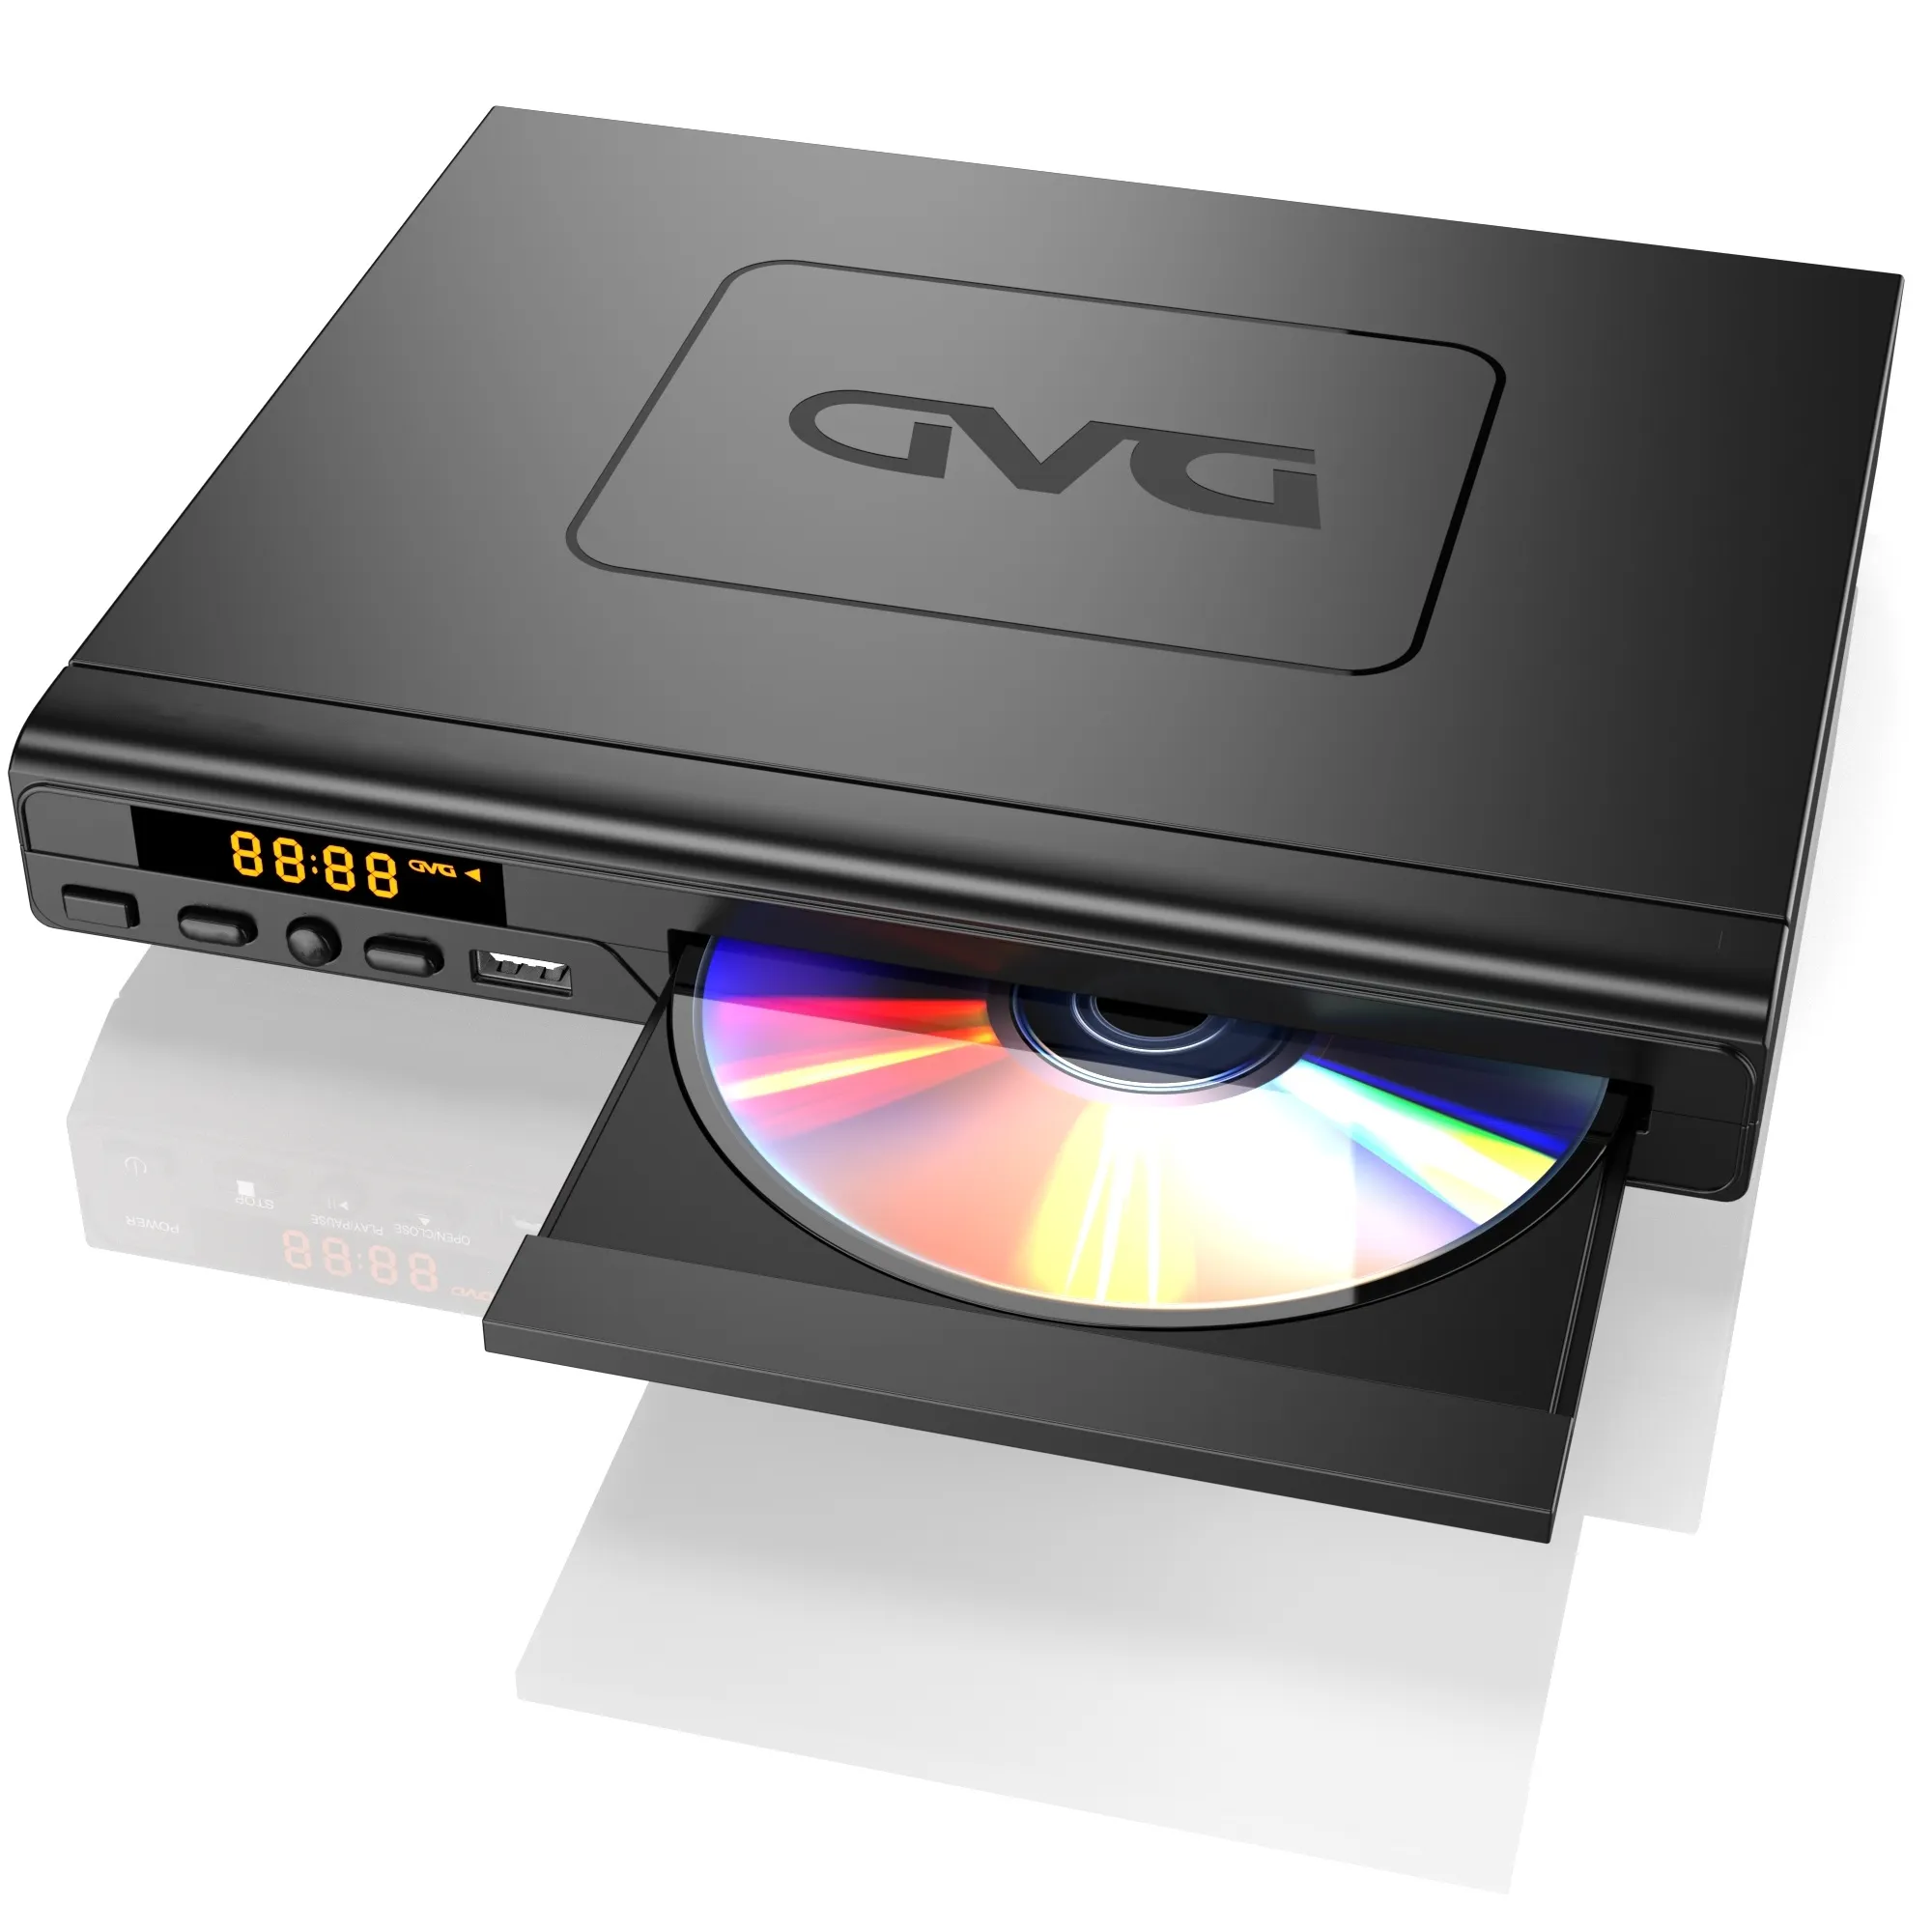 Full HD Zone Home TV DVD плеер, DVD/CD плеер с USB слот и пульт дистанционного управления